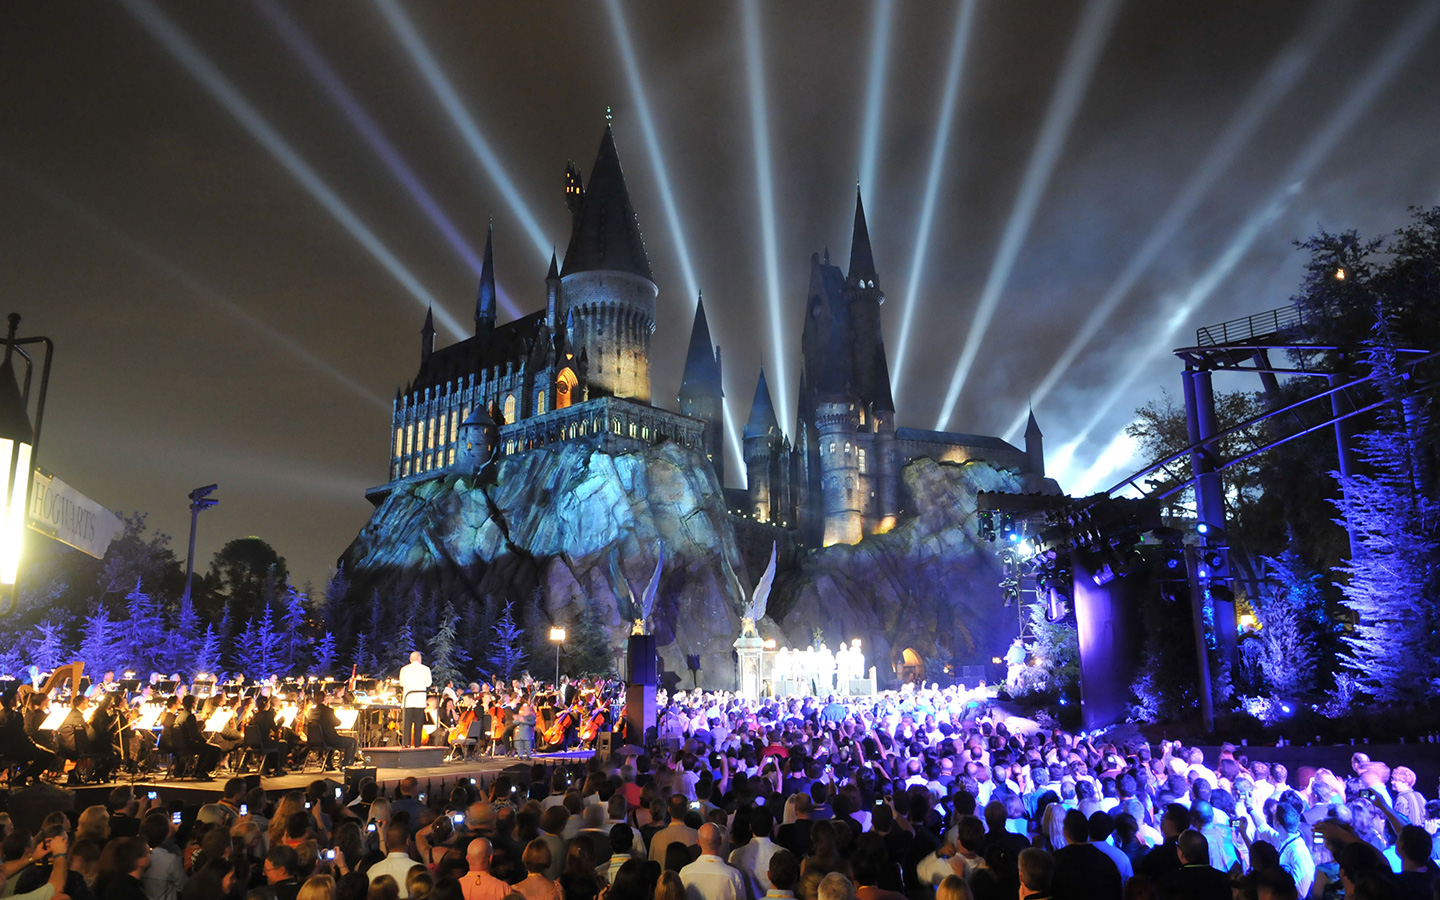 Universal: Wizarding World of Harry Potter hits 10-year mark